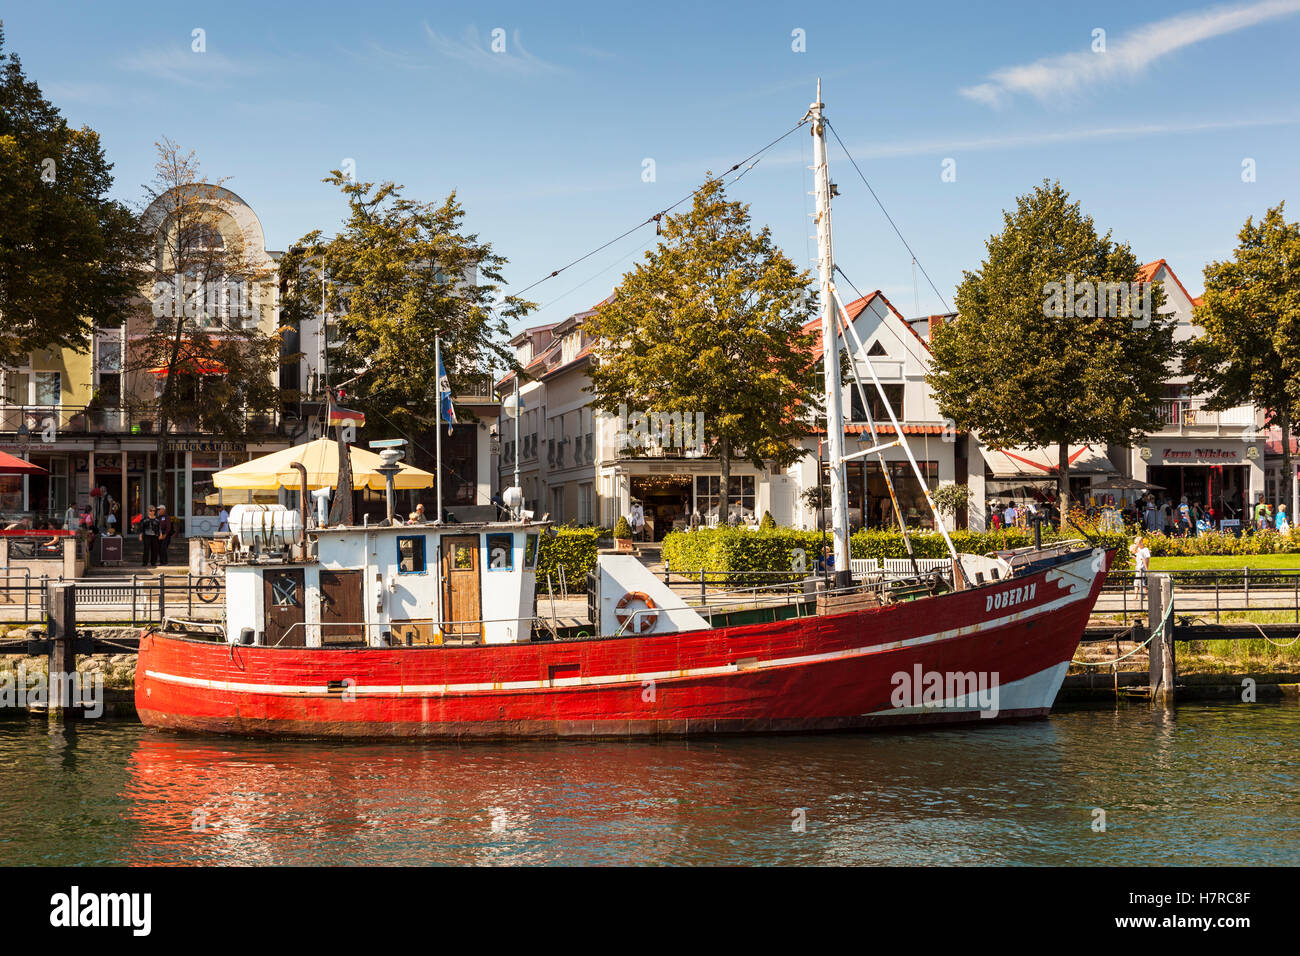 Barca da pesca, il Doberan, Alter Strom Canal, e Am Strom Street, Warnemunde, Germania Foto Stock